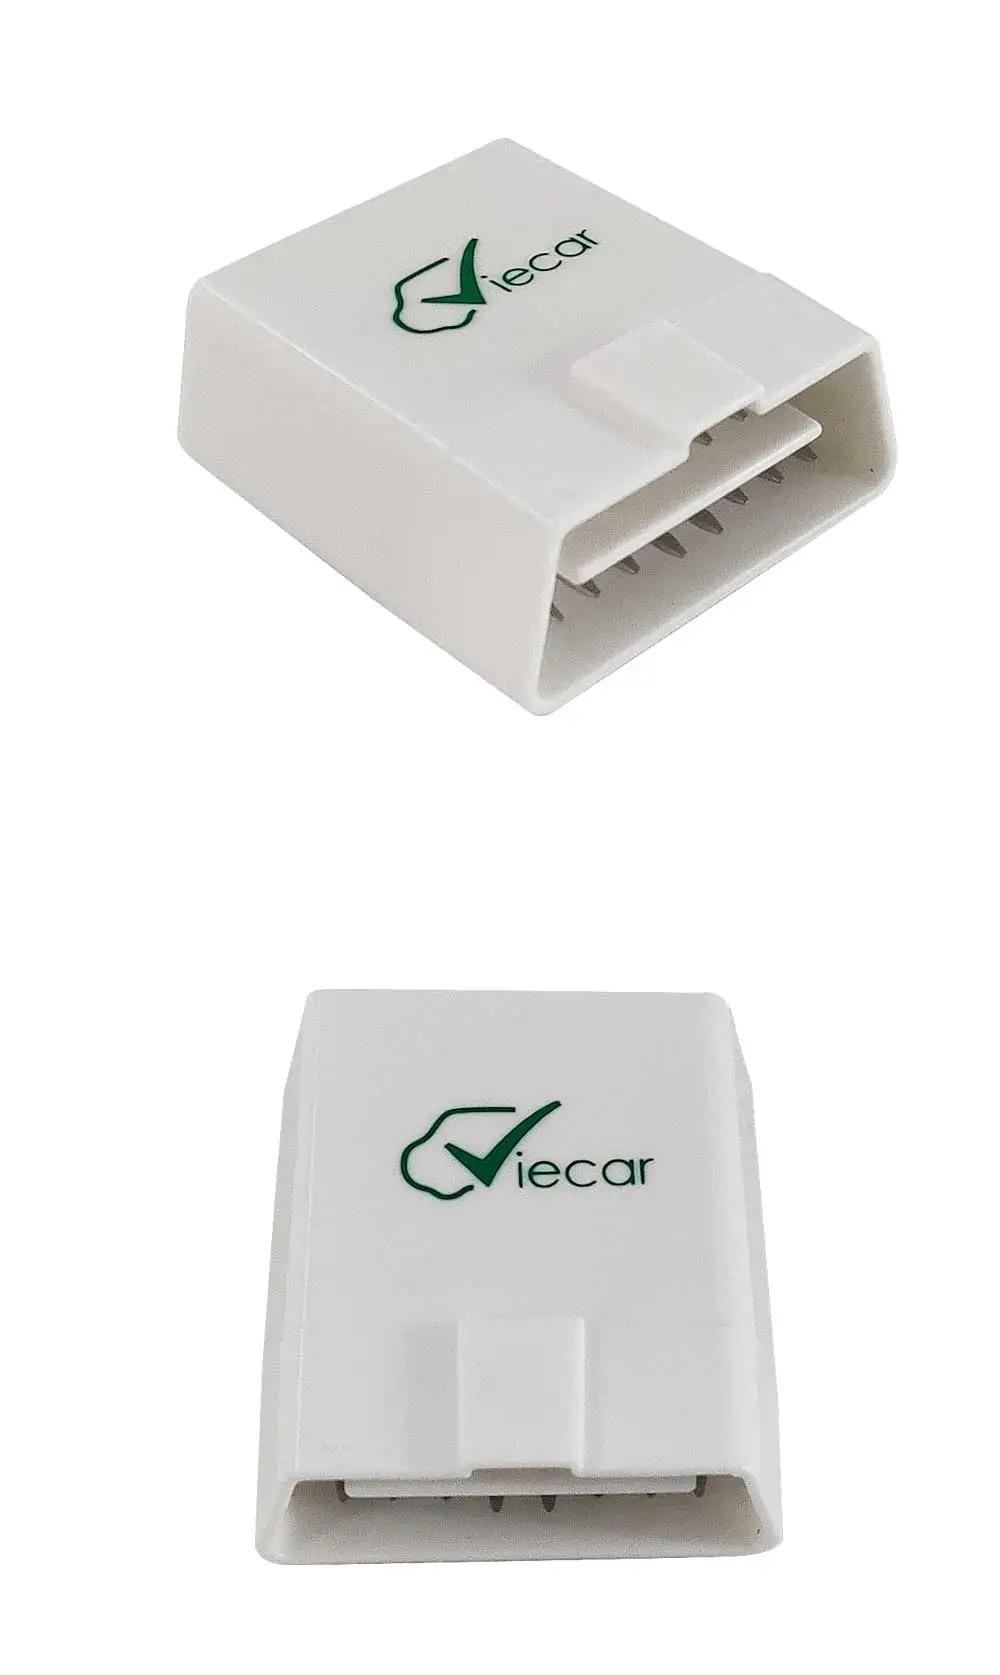 Viecar ELM 327 V1.5 PIC18F25K80 OBD 2 Bluetooth 4,0 для Android/IOS/PC OBD OBD2 Автомобильный сканер для диагностики авто инструмент elm327 v1.5